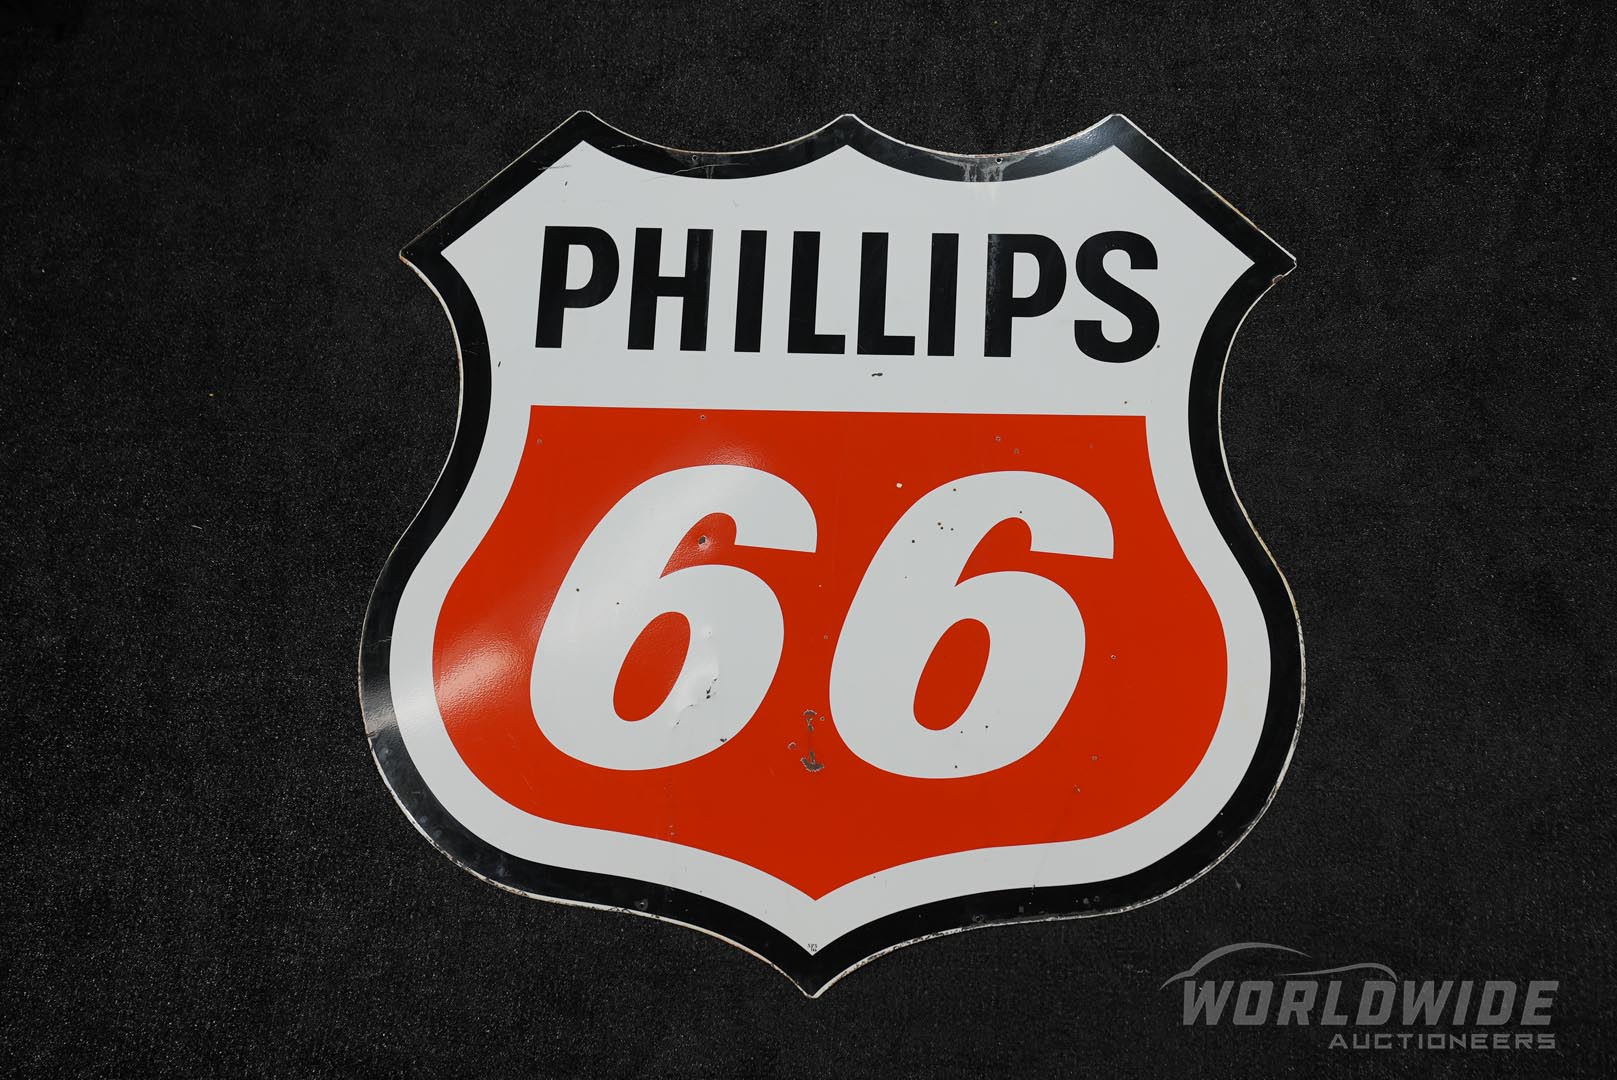  Large Phillips 66 Shield Doubl e-Sided Porcelain Sign 